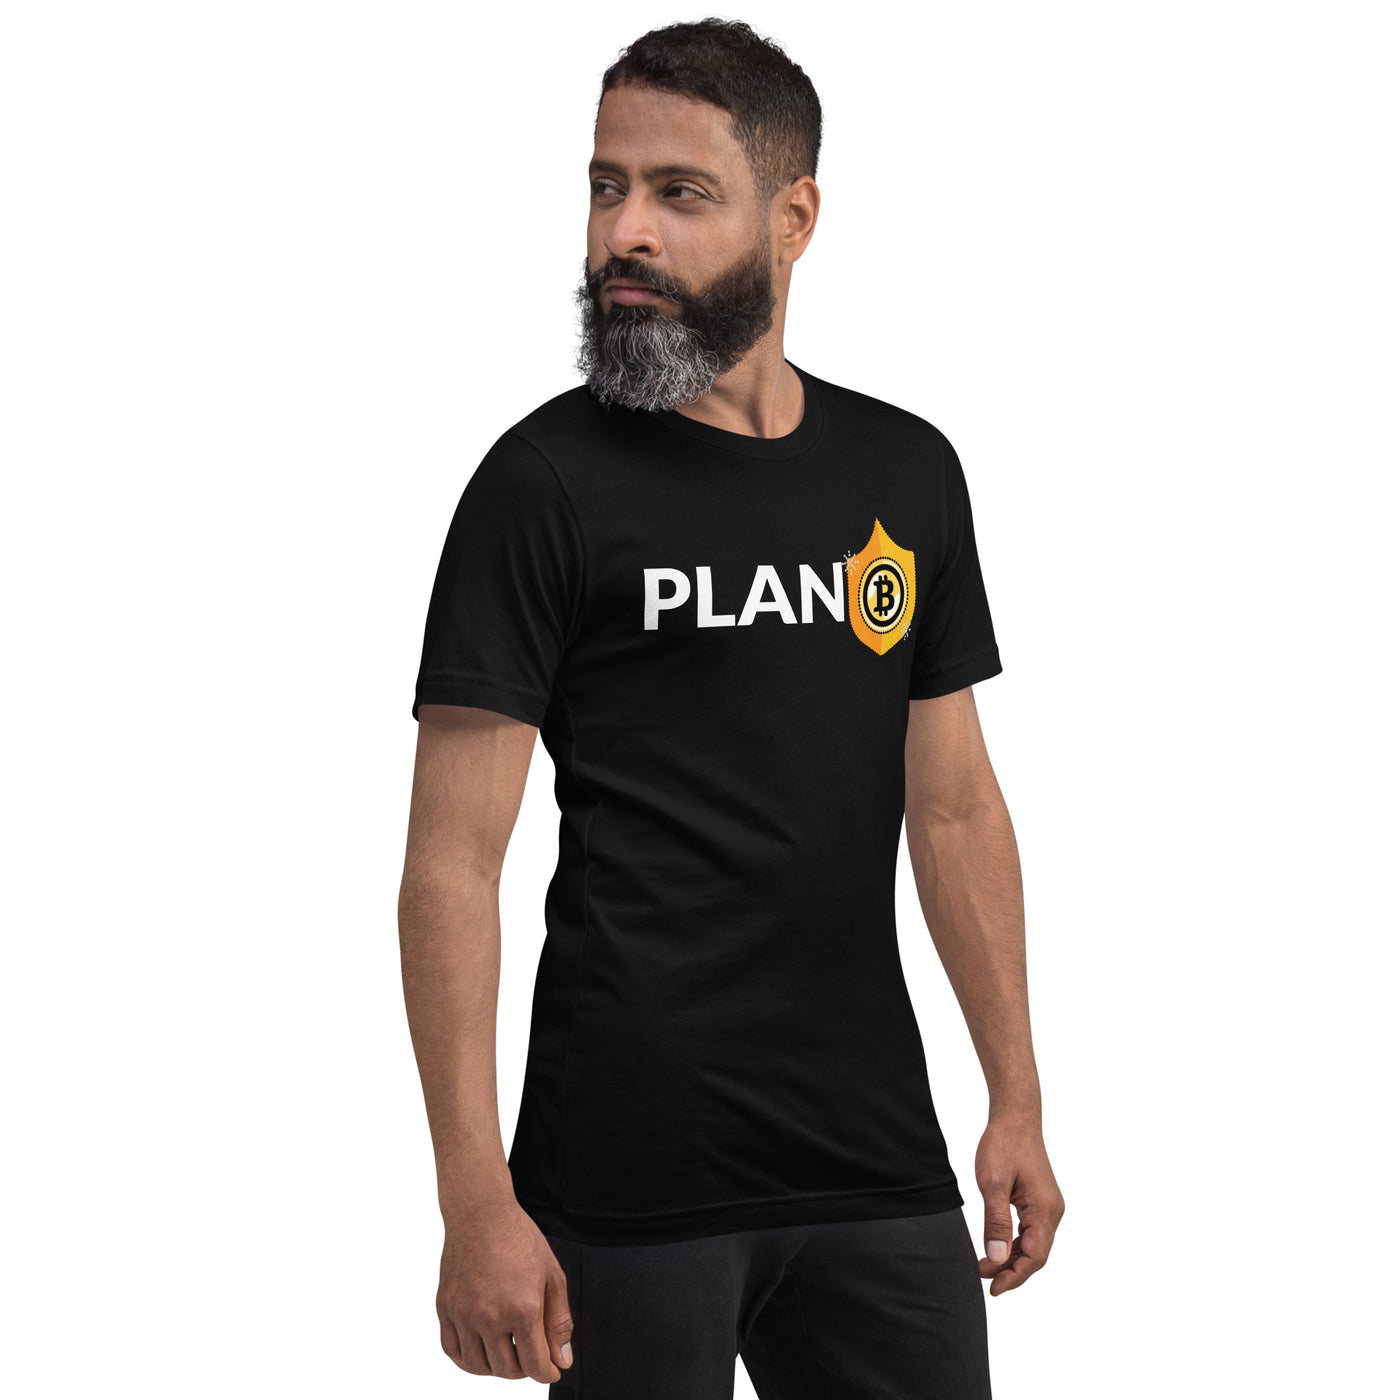 Plan B v2 - Unisex T-shirt